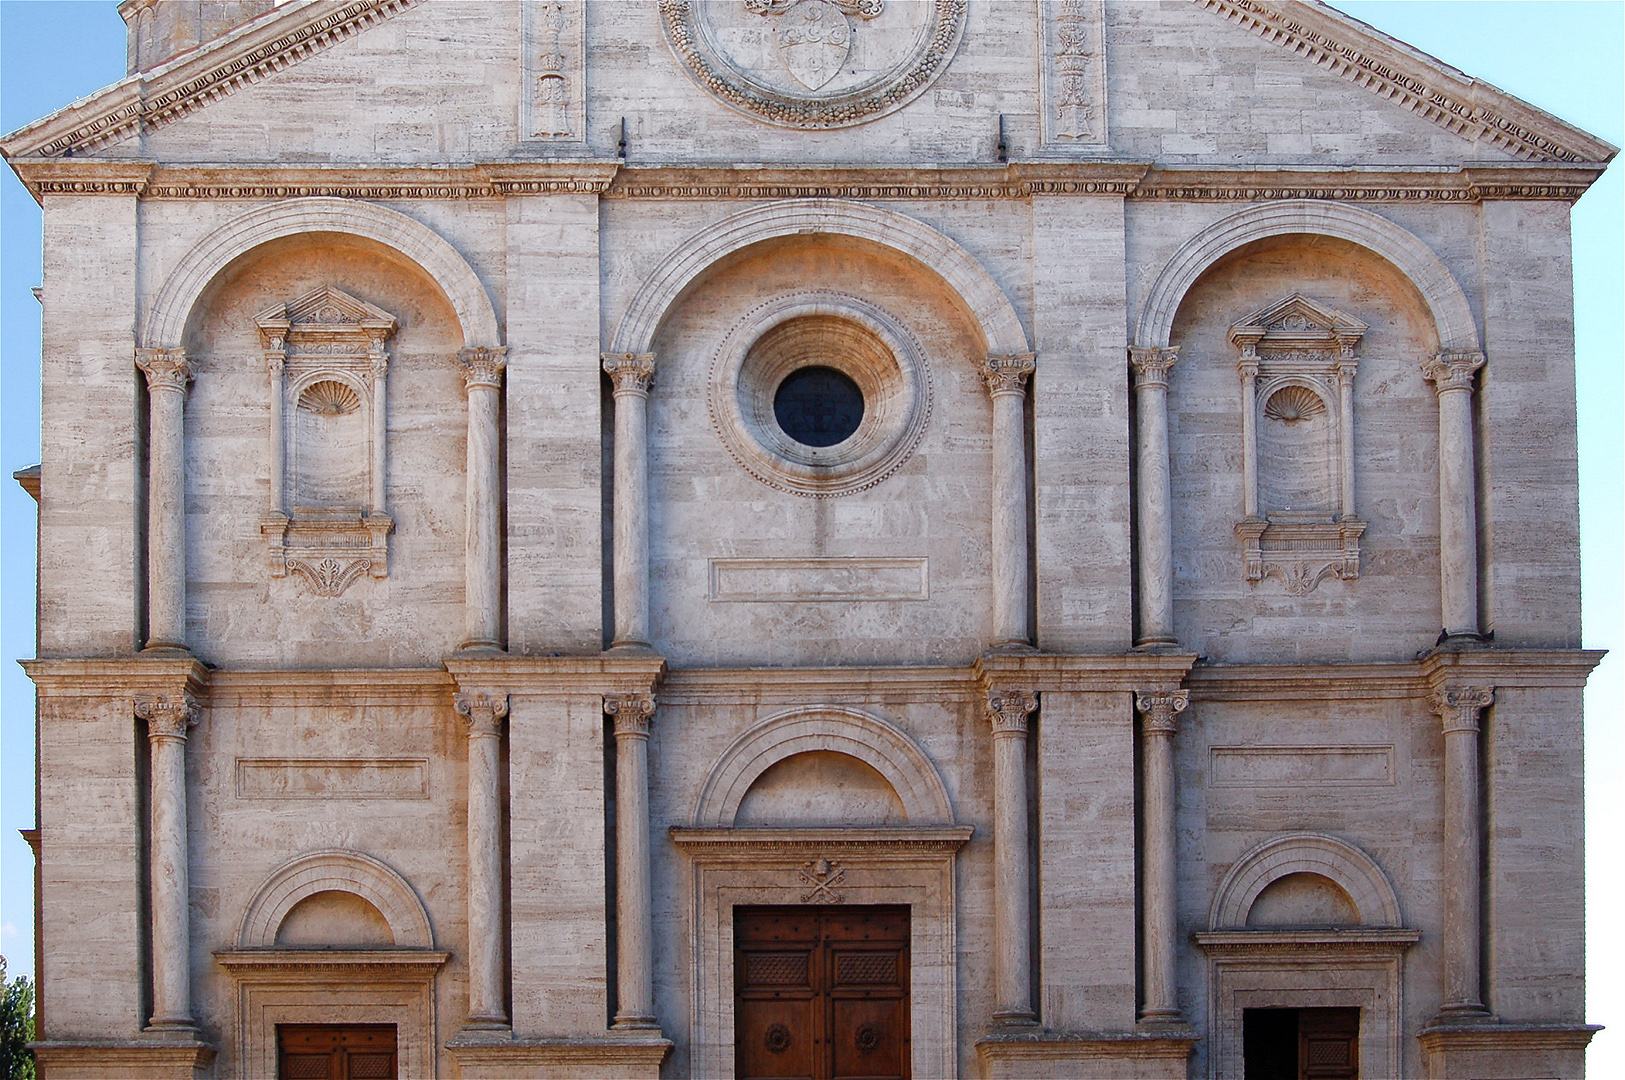 Co-kathedraal van Pienza (SI, Toscane, Itali); Pienza Cathedral (SI, Tuscany, Italy)